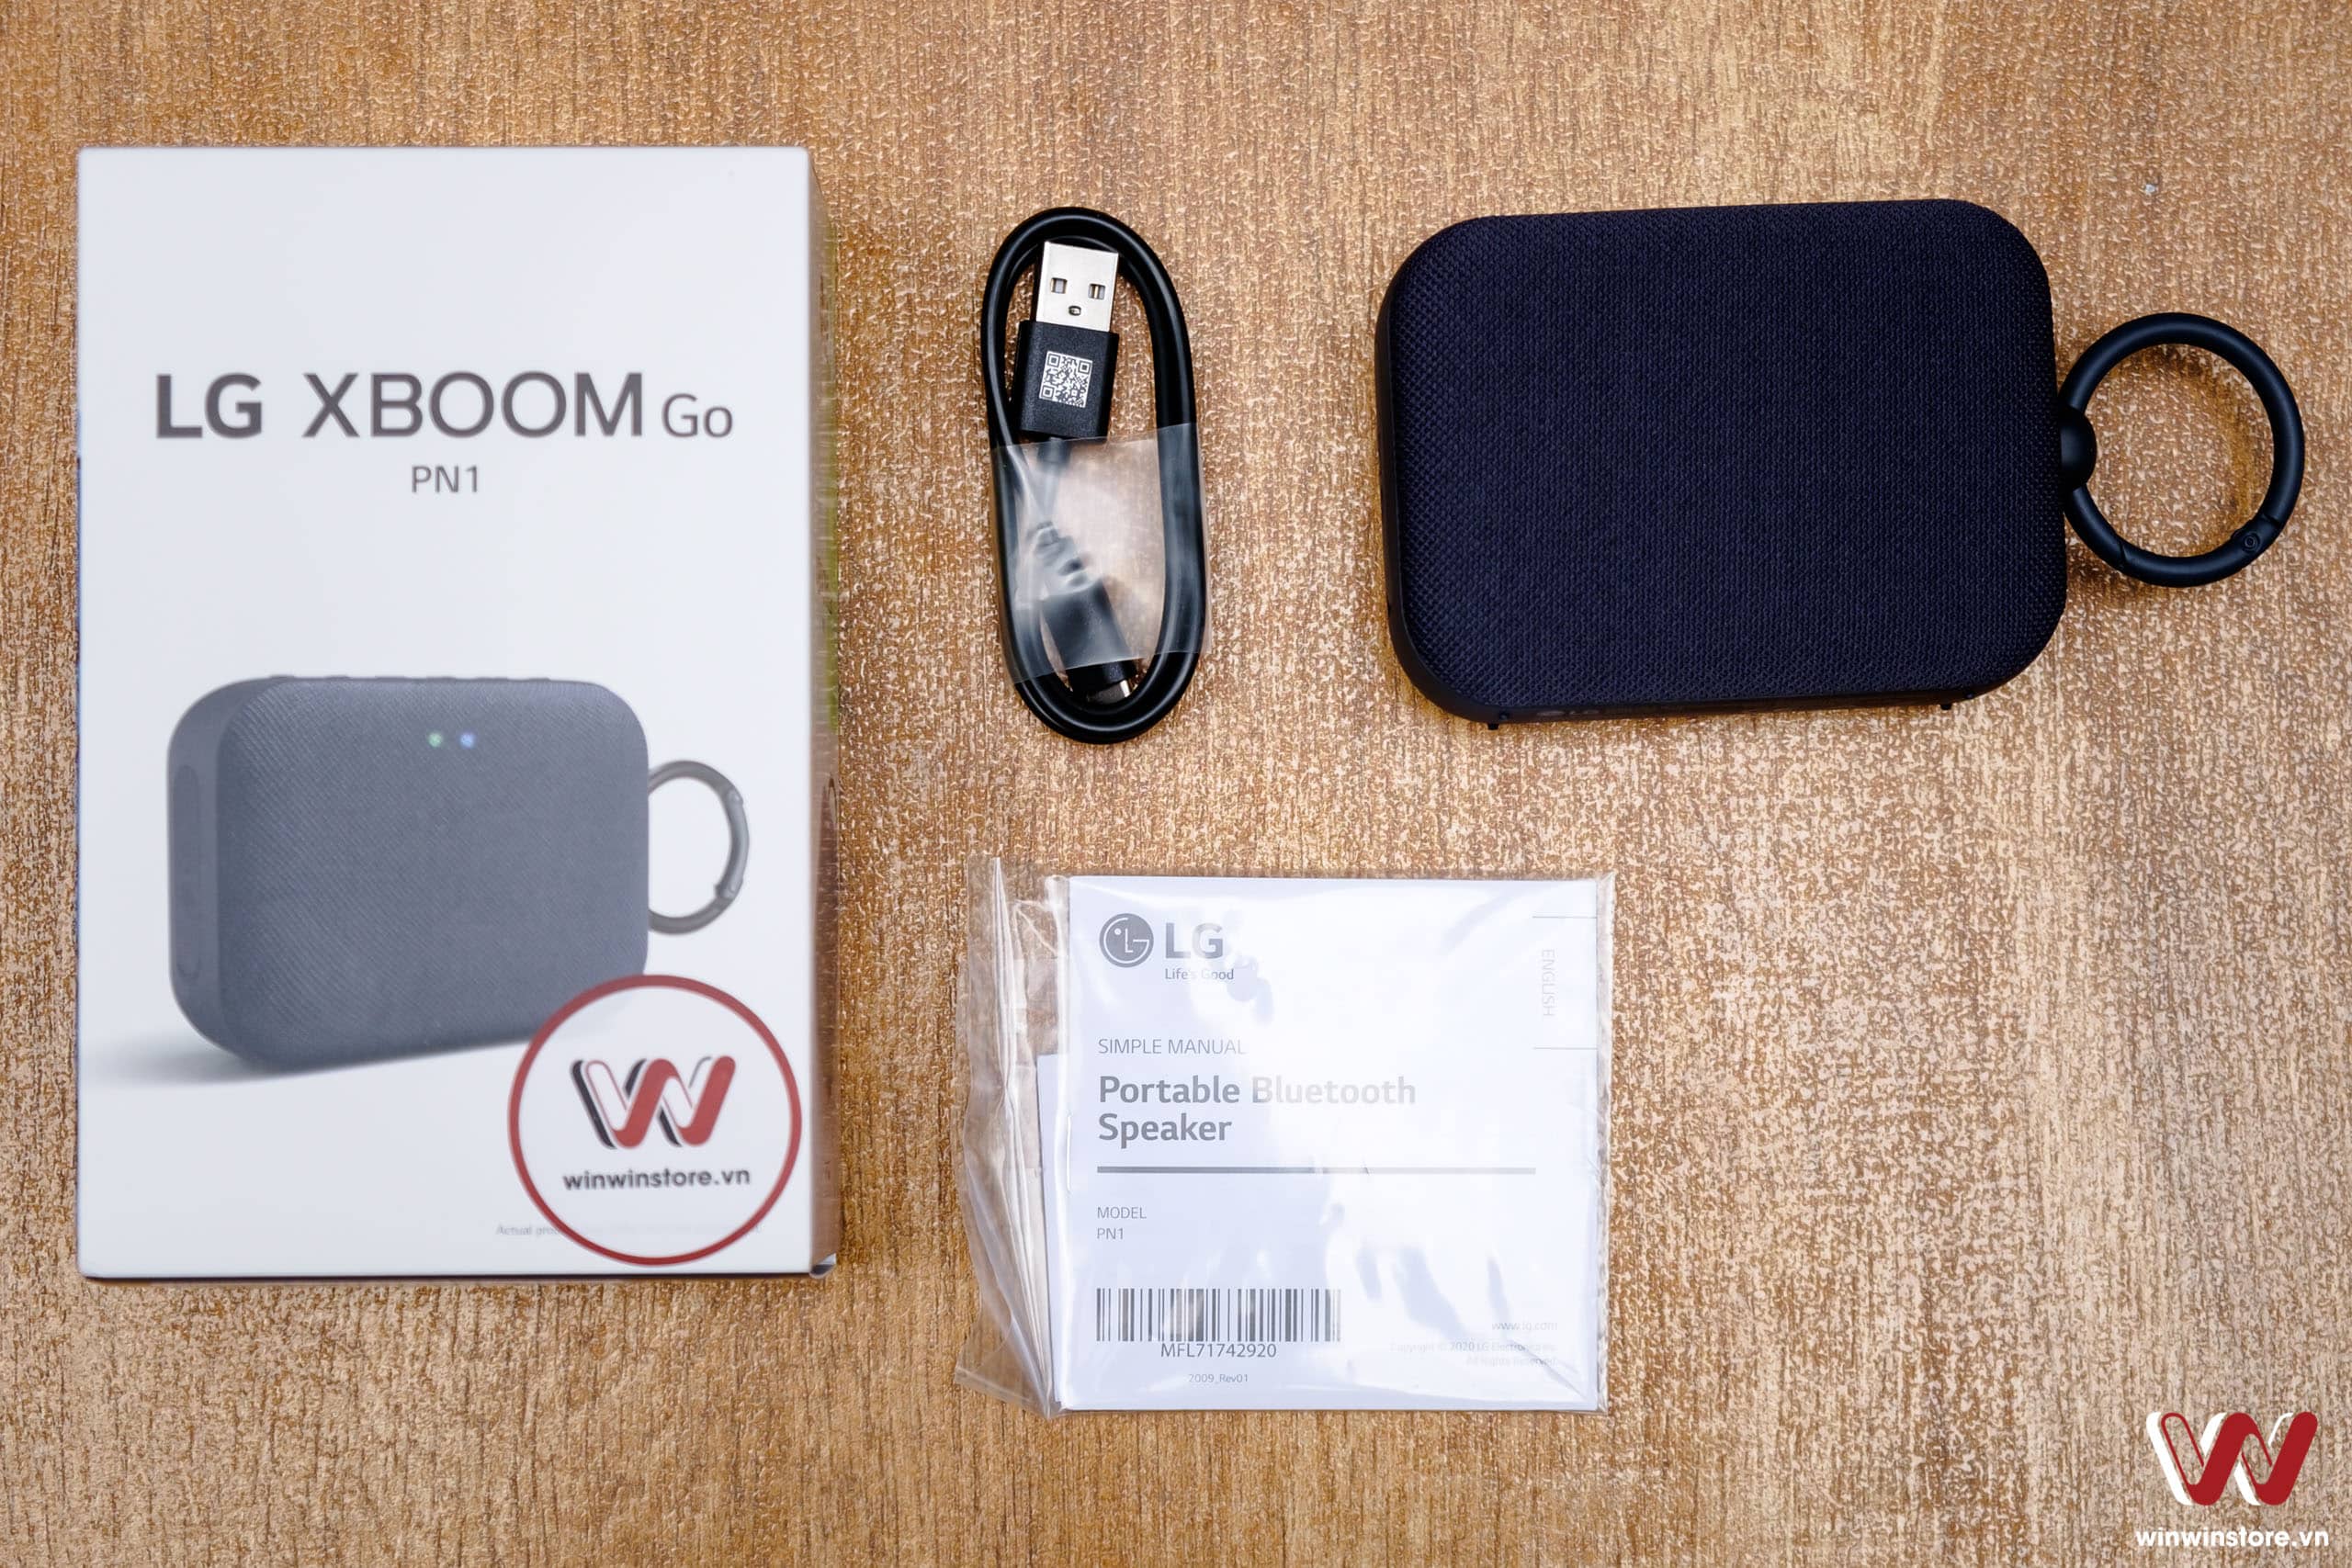 LG XBOOM Go PN1 Portable Bluetooth Speaker